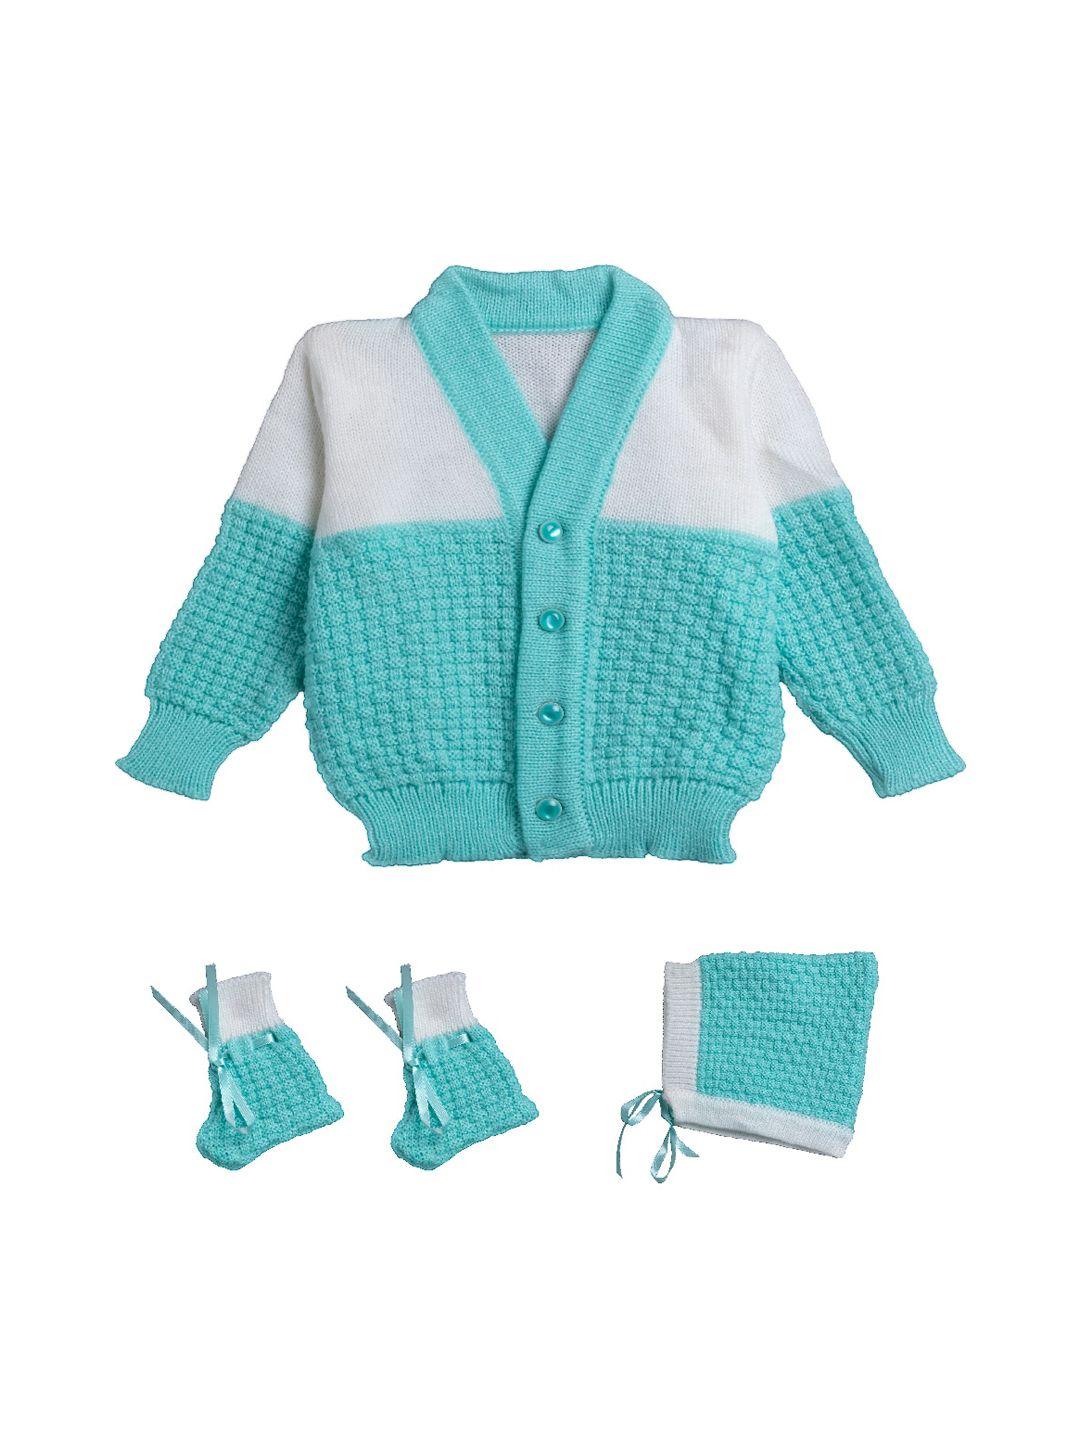 little angels infant kids teal blue & white colourblocked acrylic cardigan sweater set